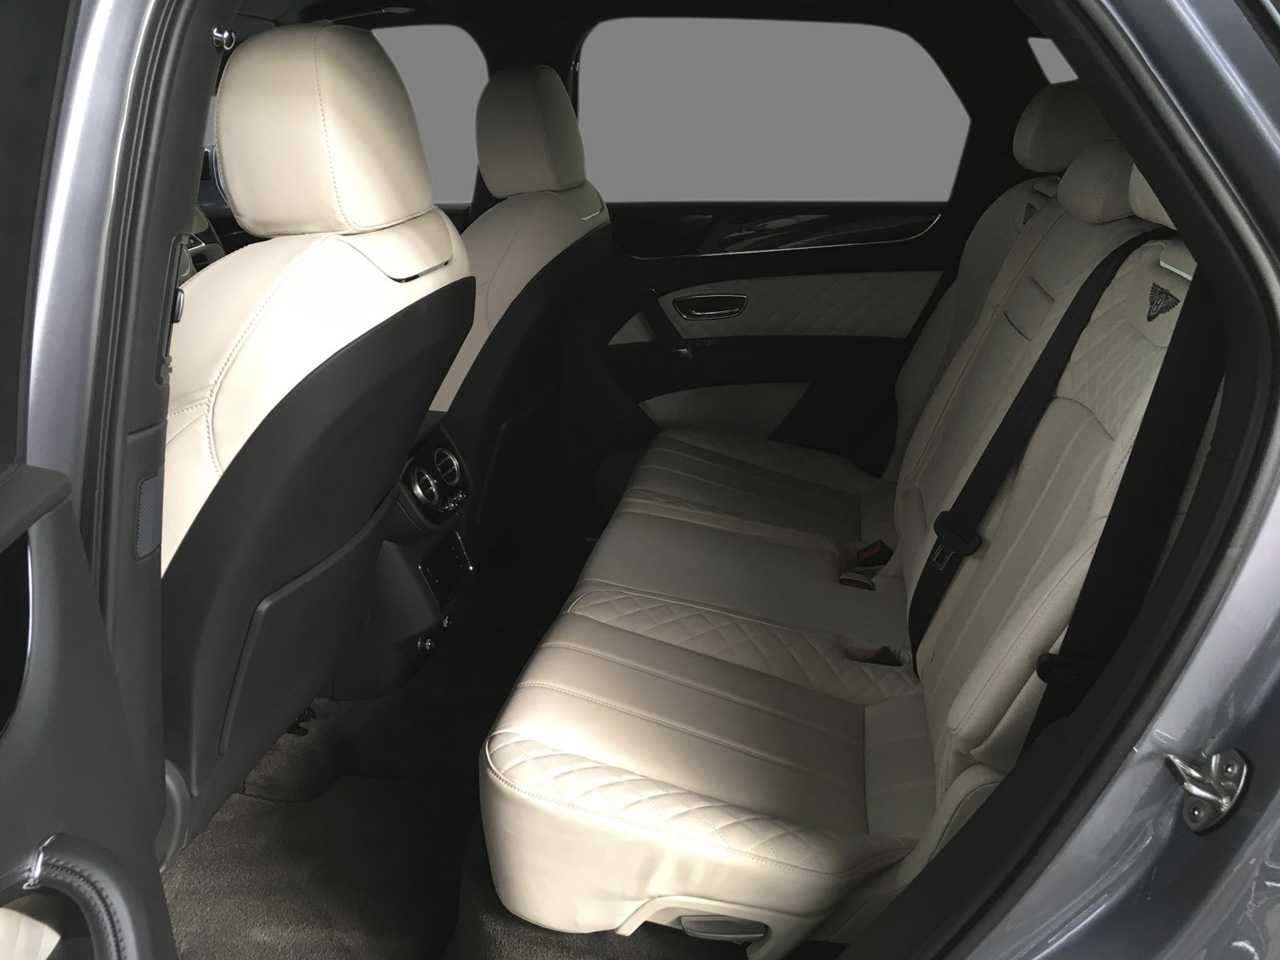 Bentley Bentayga seats